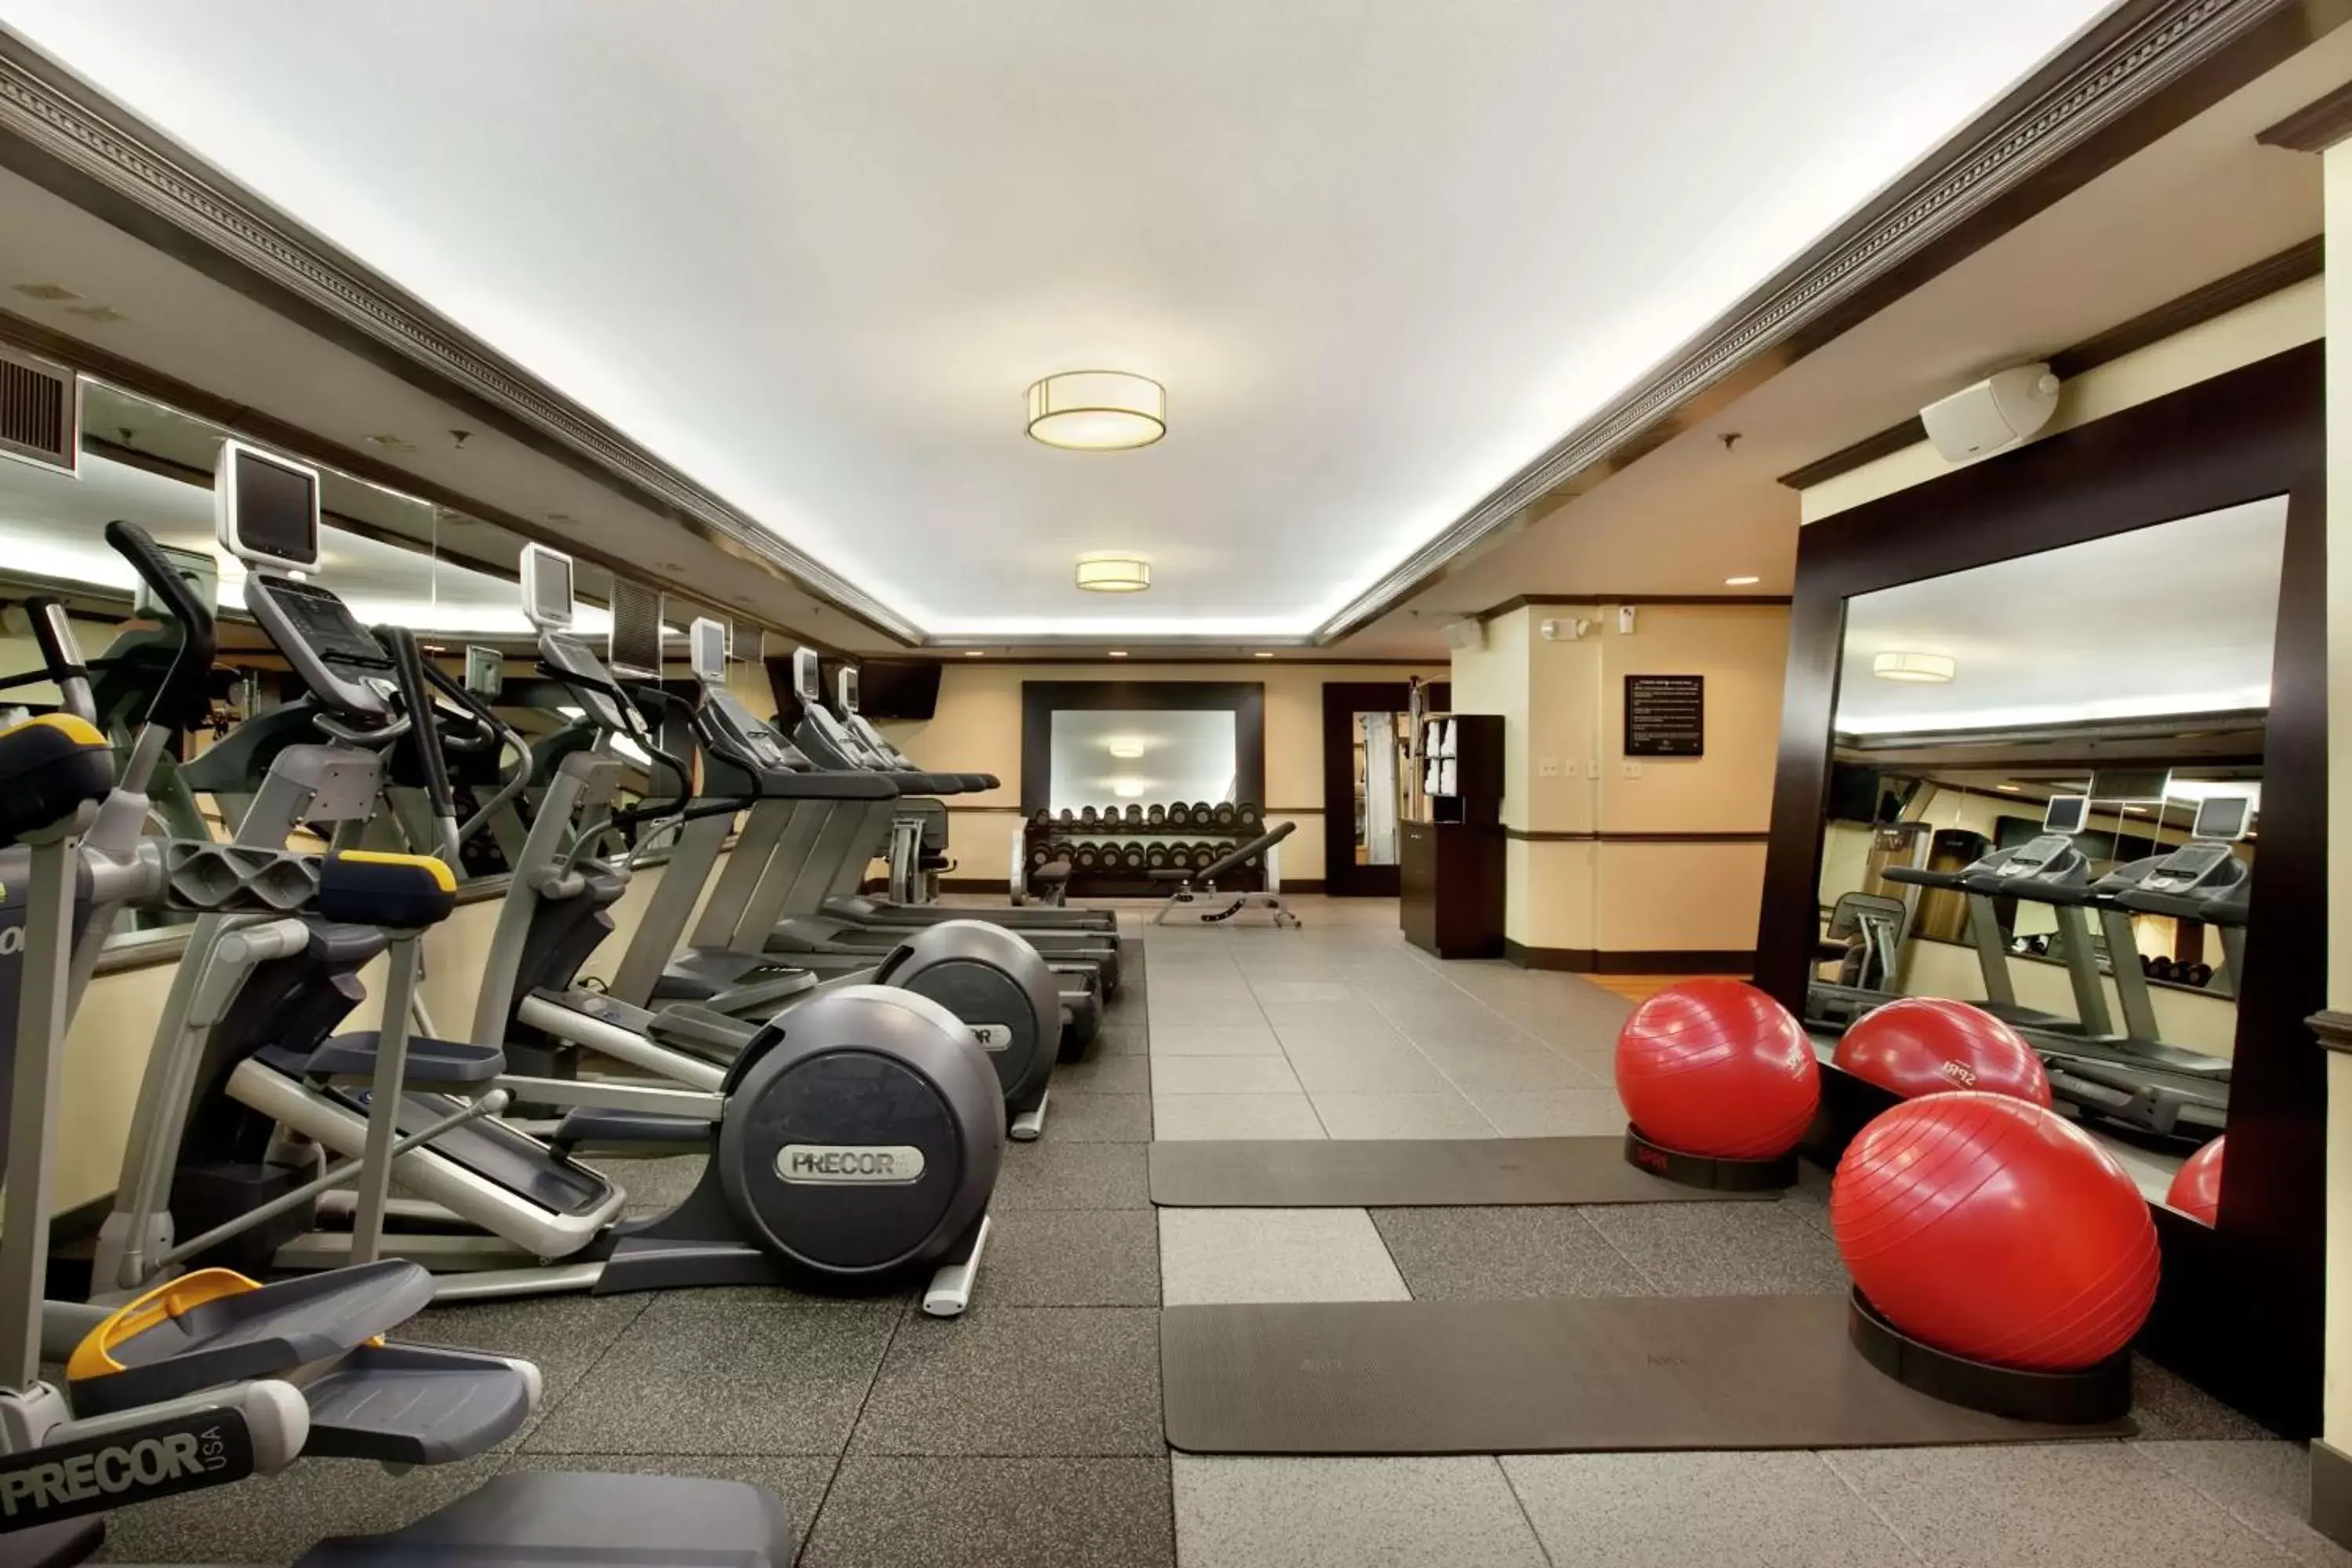 Fitness centre/facilities, Fitness Center/Facilities in Hilton Orrington/Evanston